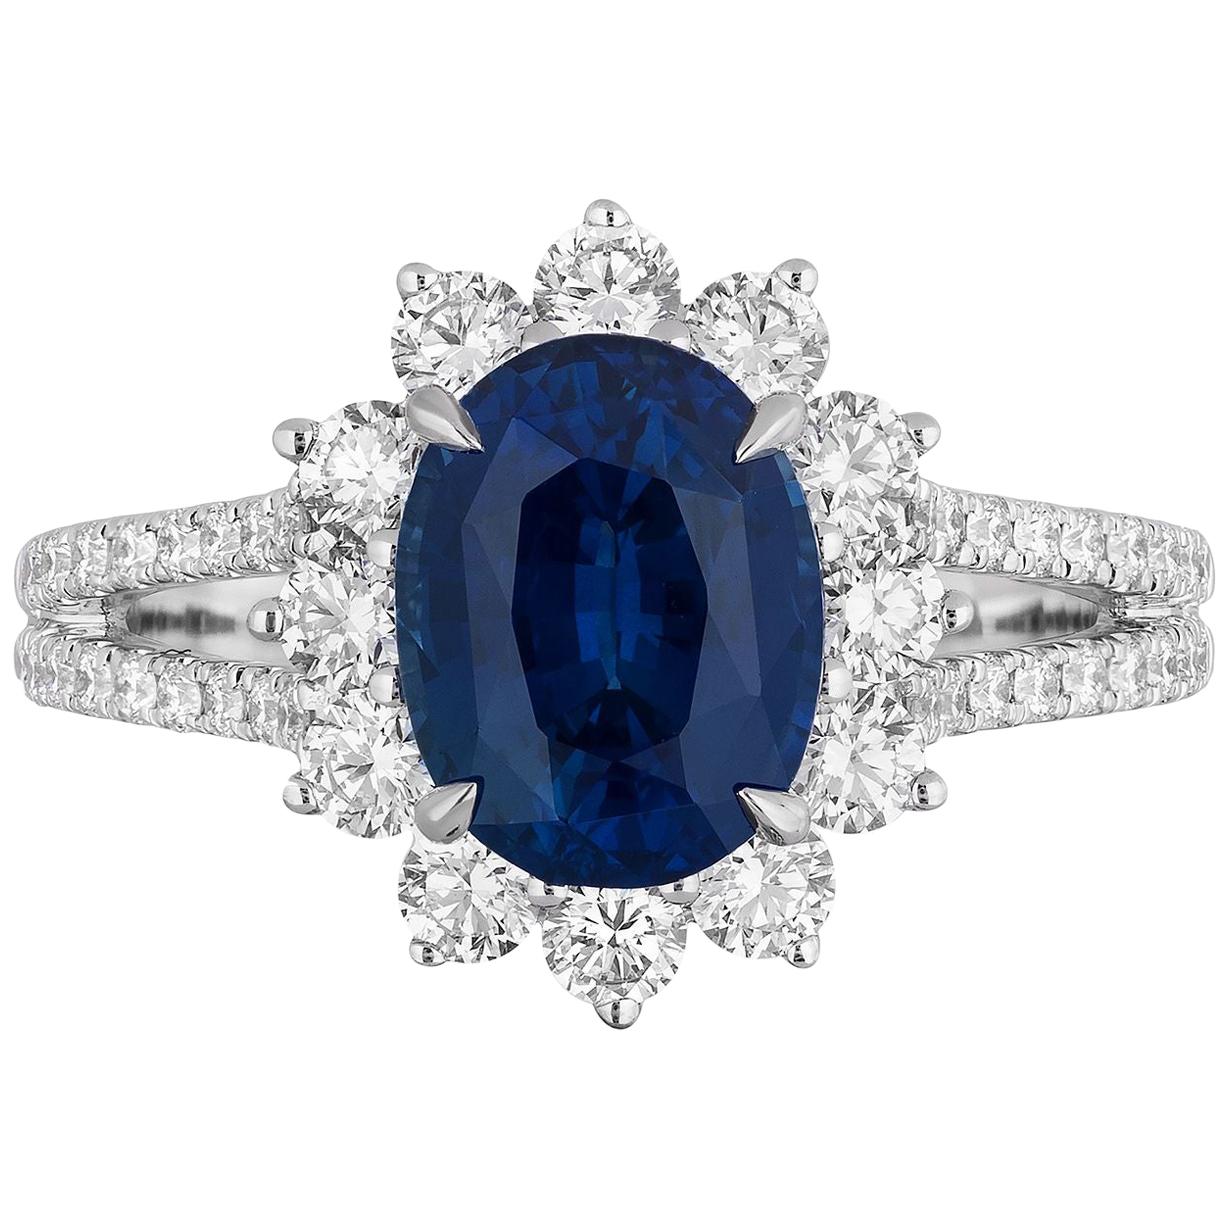 2.82 Carat Sapphire Diamond Cocktail Ring